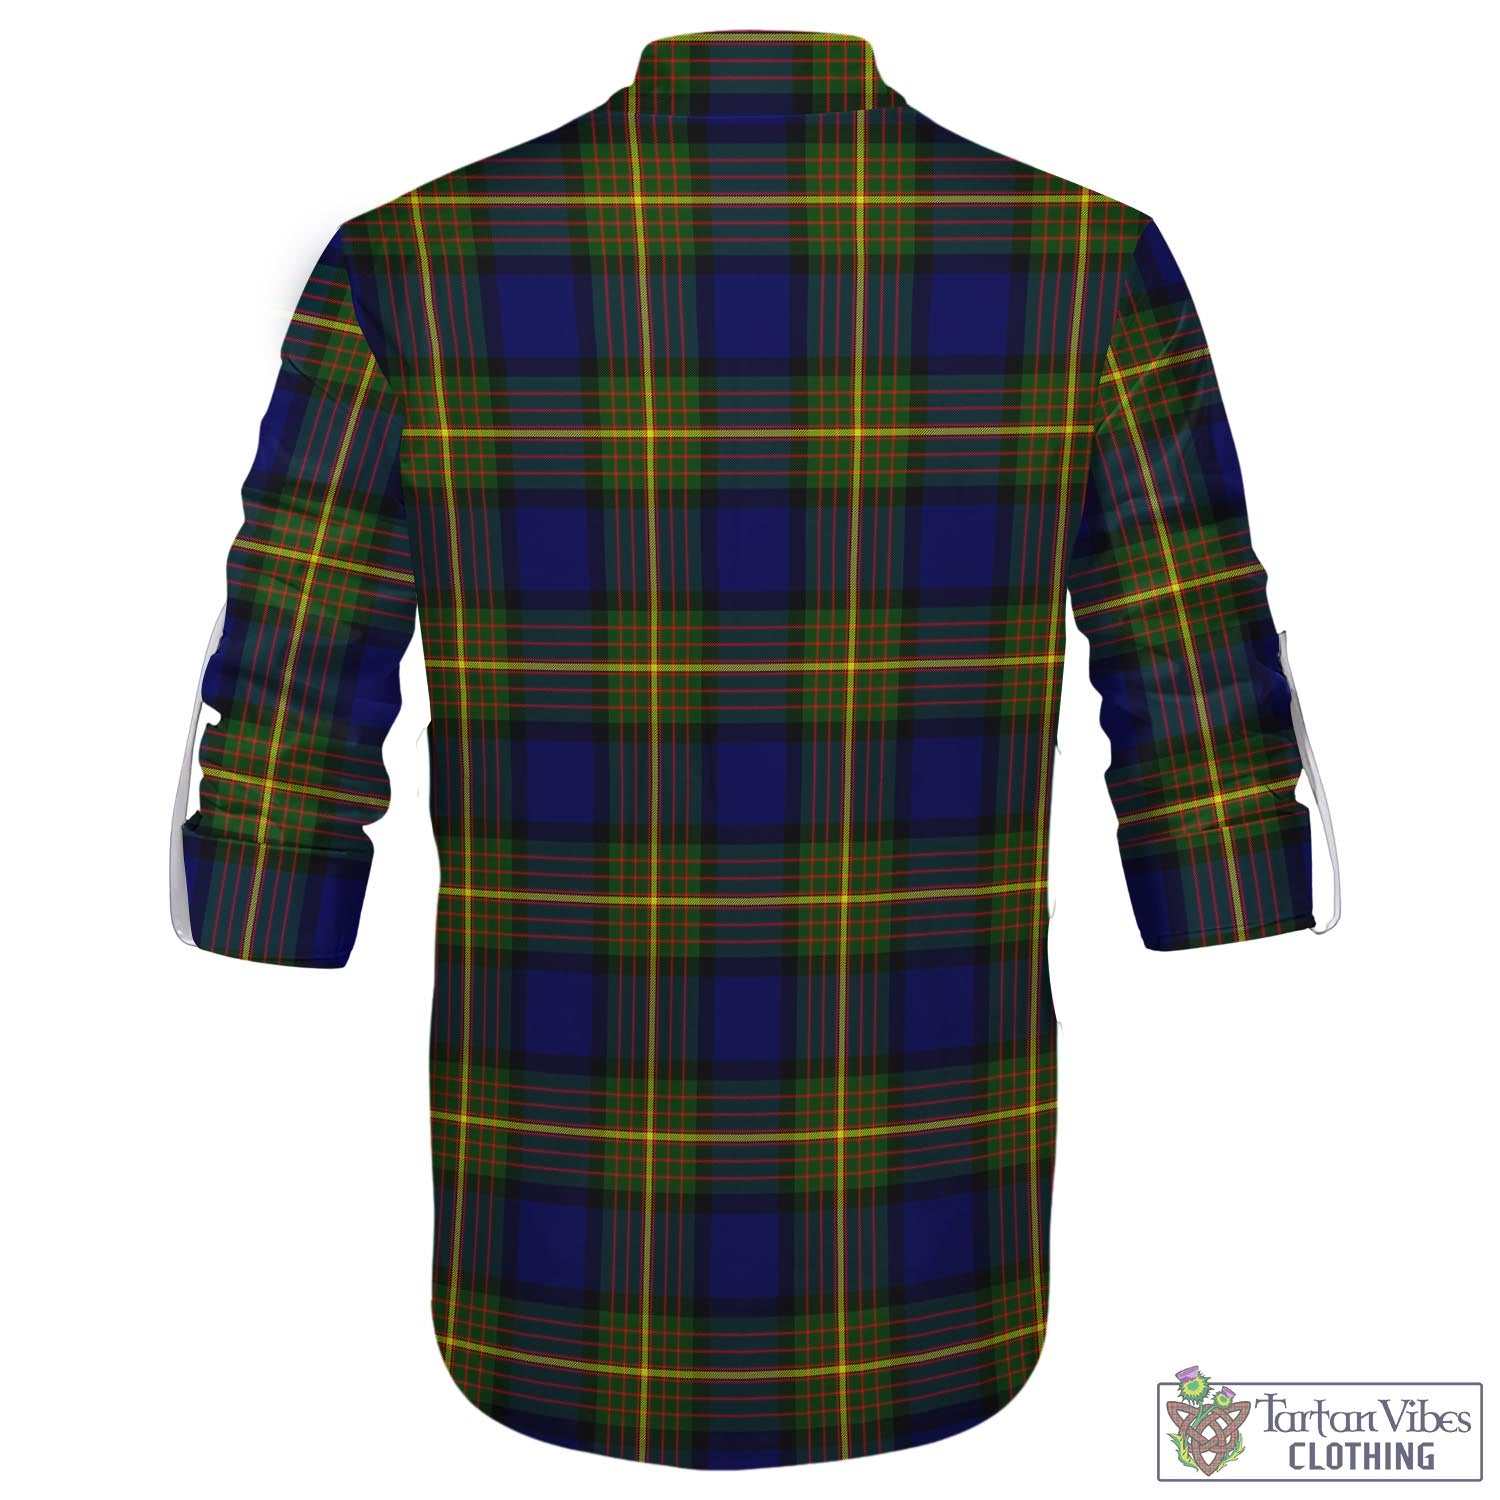 Tartan Vibes Clothing Muir Tartan Men's Scottish Traditional Jacobite Ghillie Kilt Shirt